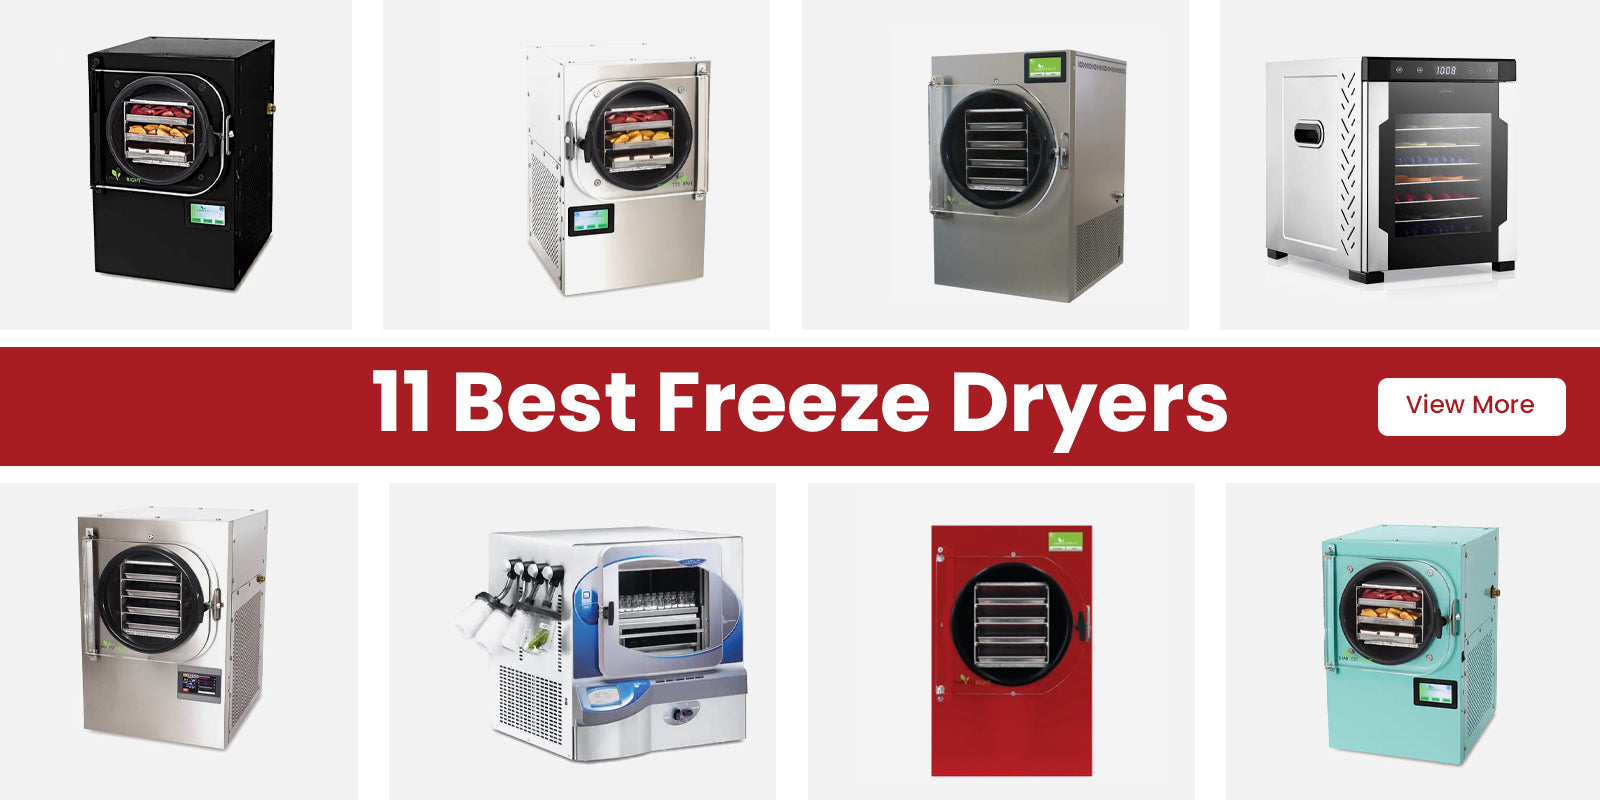 Should You Buy a Freeze Dryer - GoodLand Kitchen